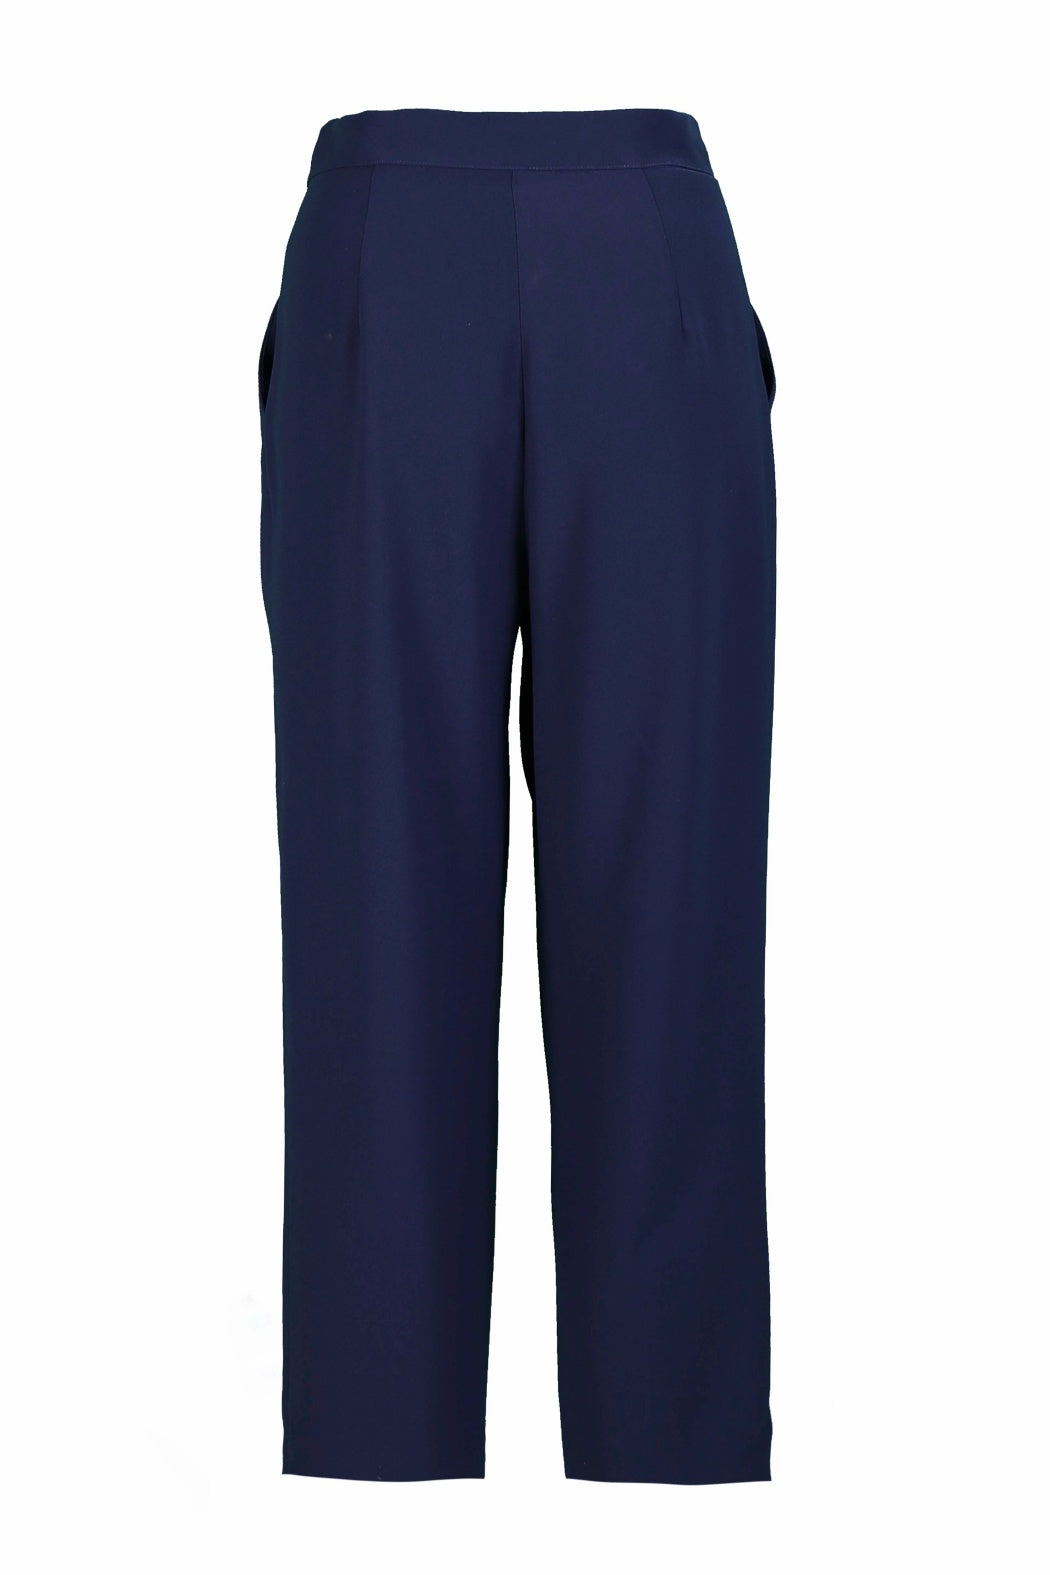 Marvel Navy Blue Pleated Crepe Women's Pants